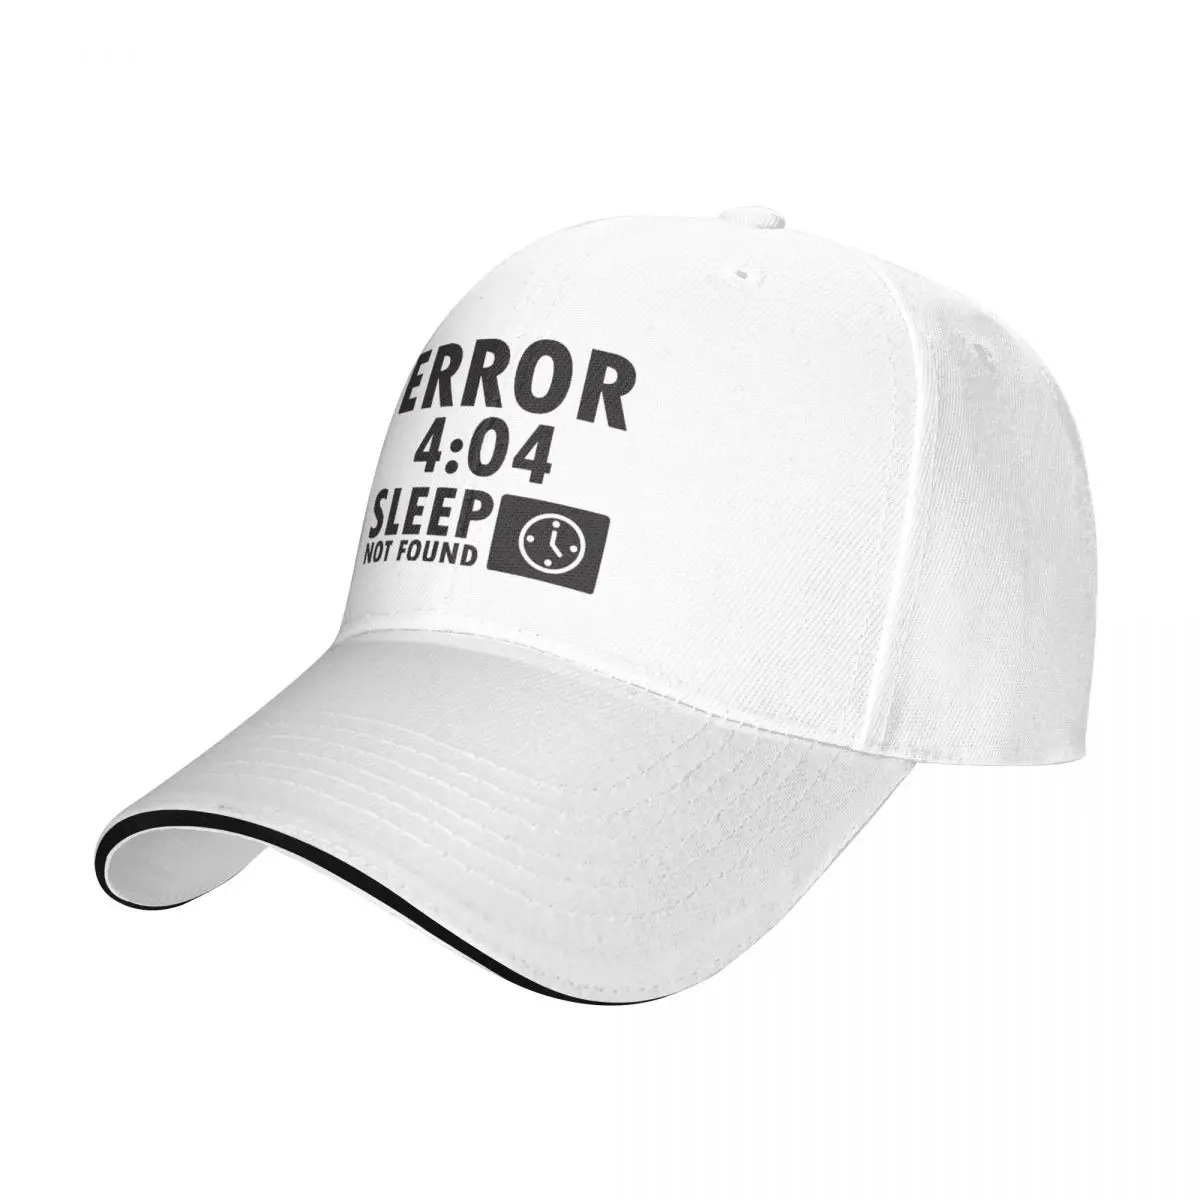 Error 404 Sleep Not Found Baseball Cap Funny Words Fitted Trucker Hat Spring Female Outdoor Custom Baseball Caps